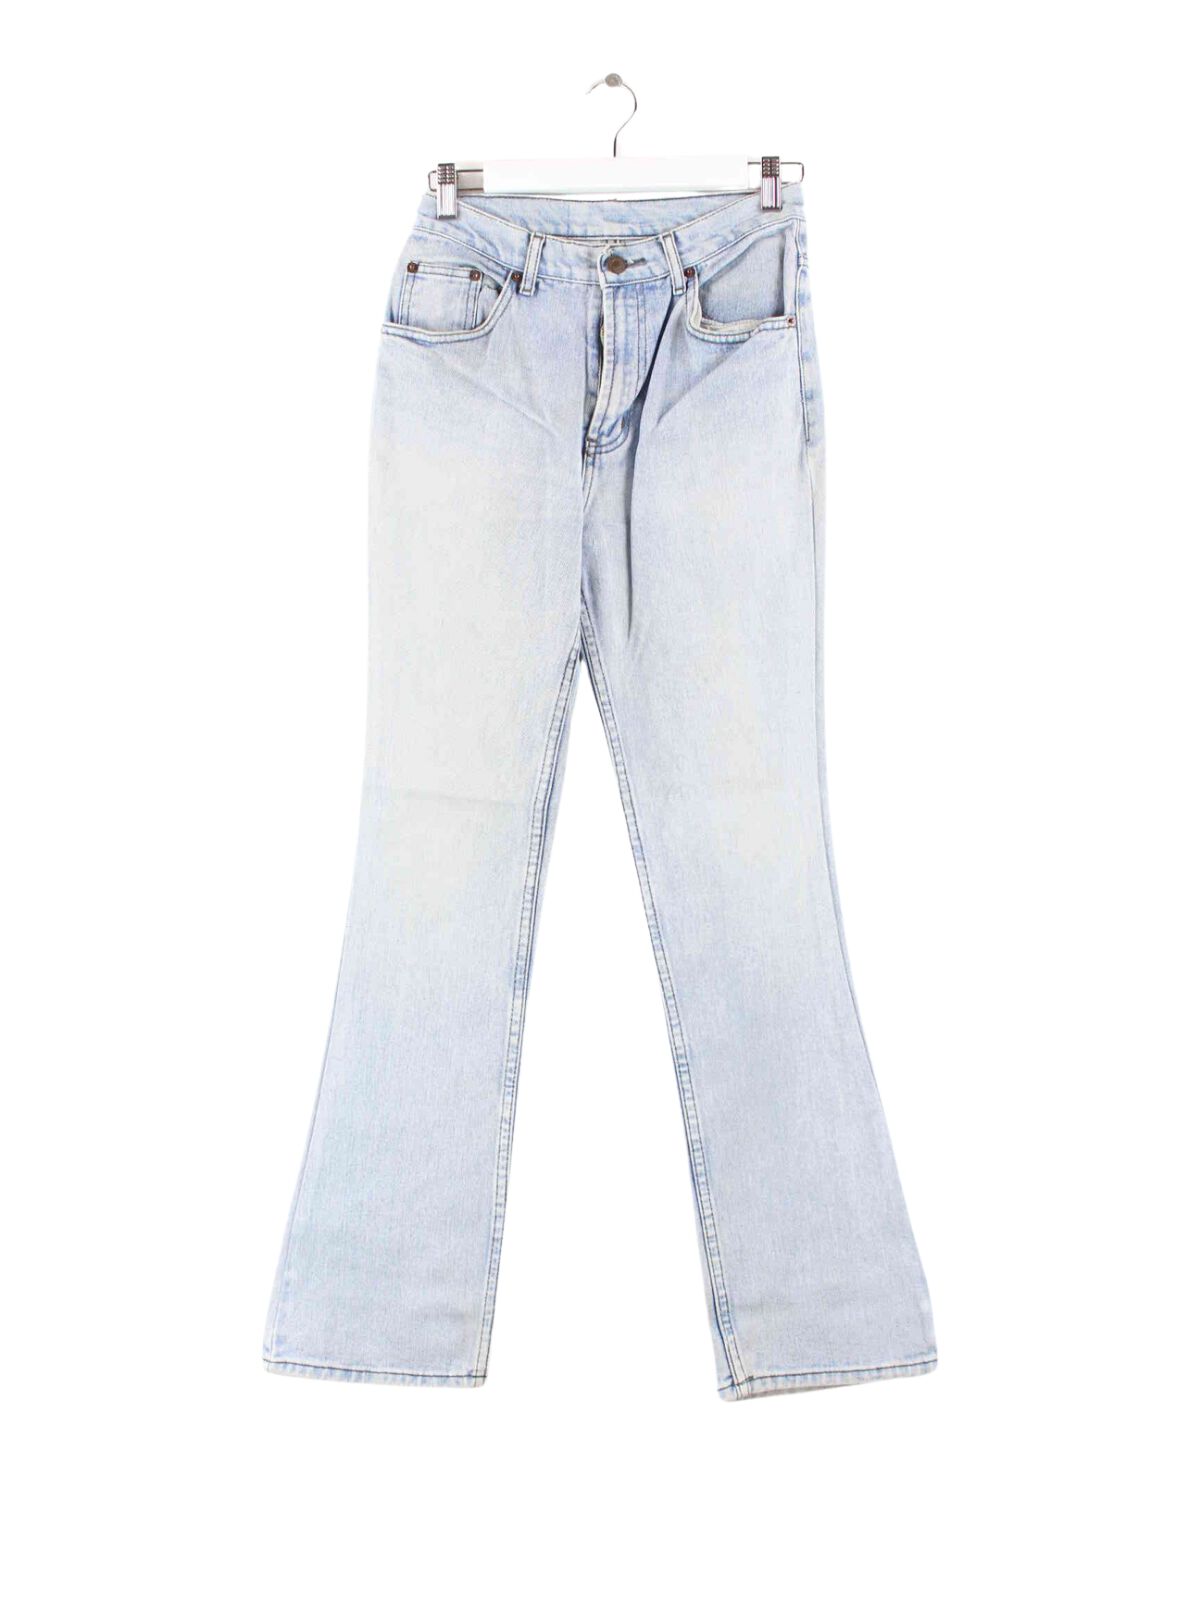 Levi's Damen 505 Jeans Blau W28 L32